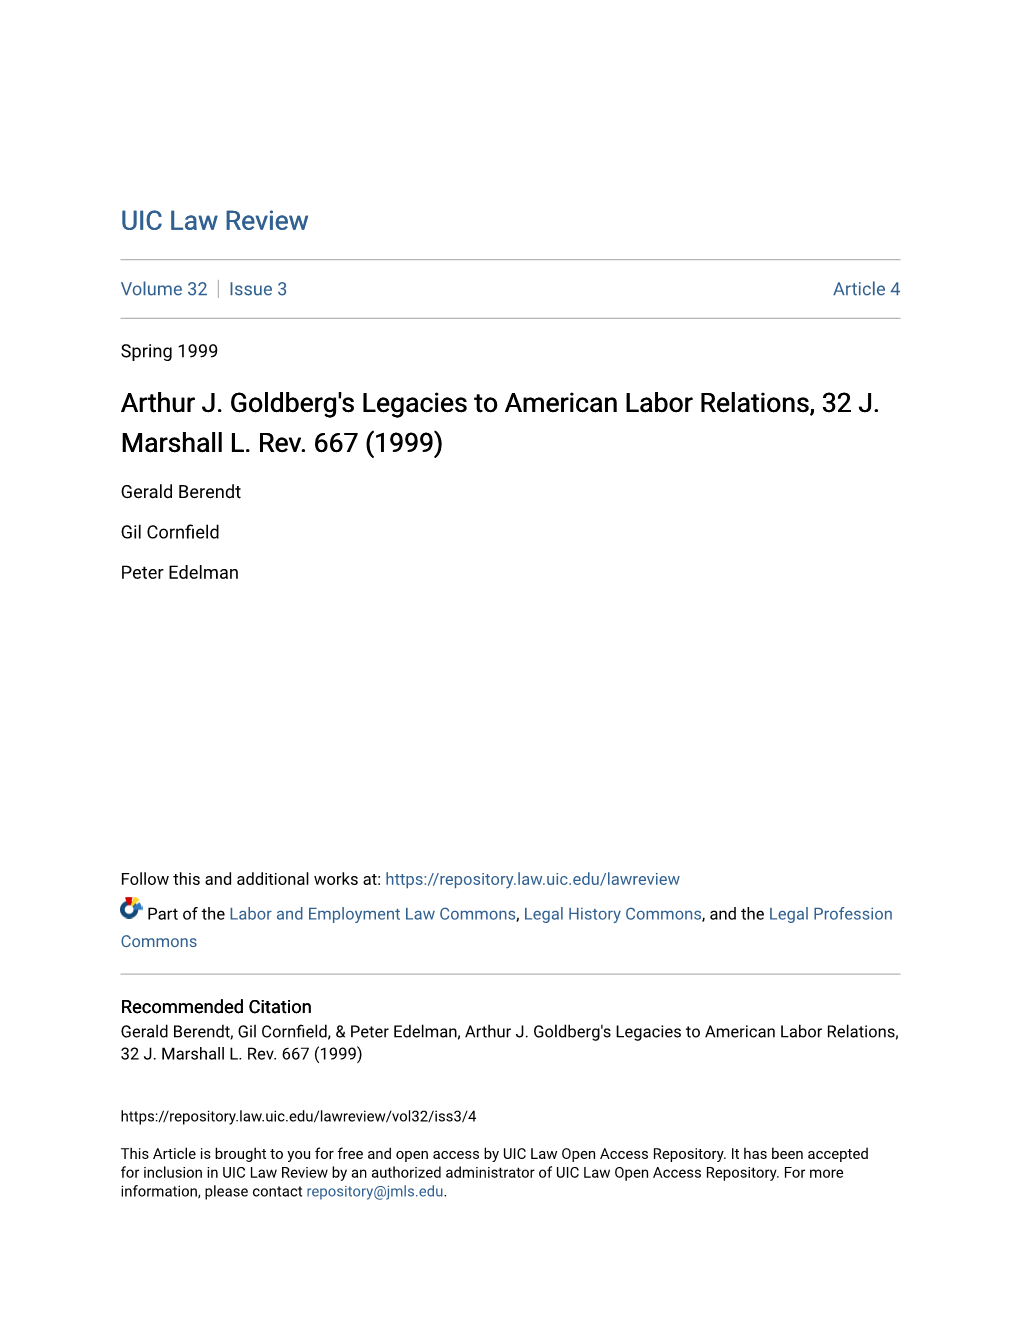 Arthur J. Goldberg's Legacies to American Labor Relations, 32 J